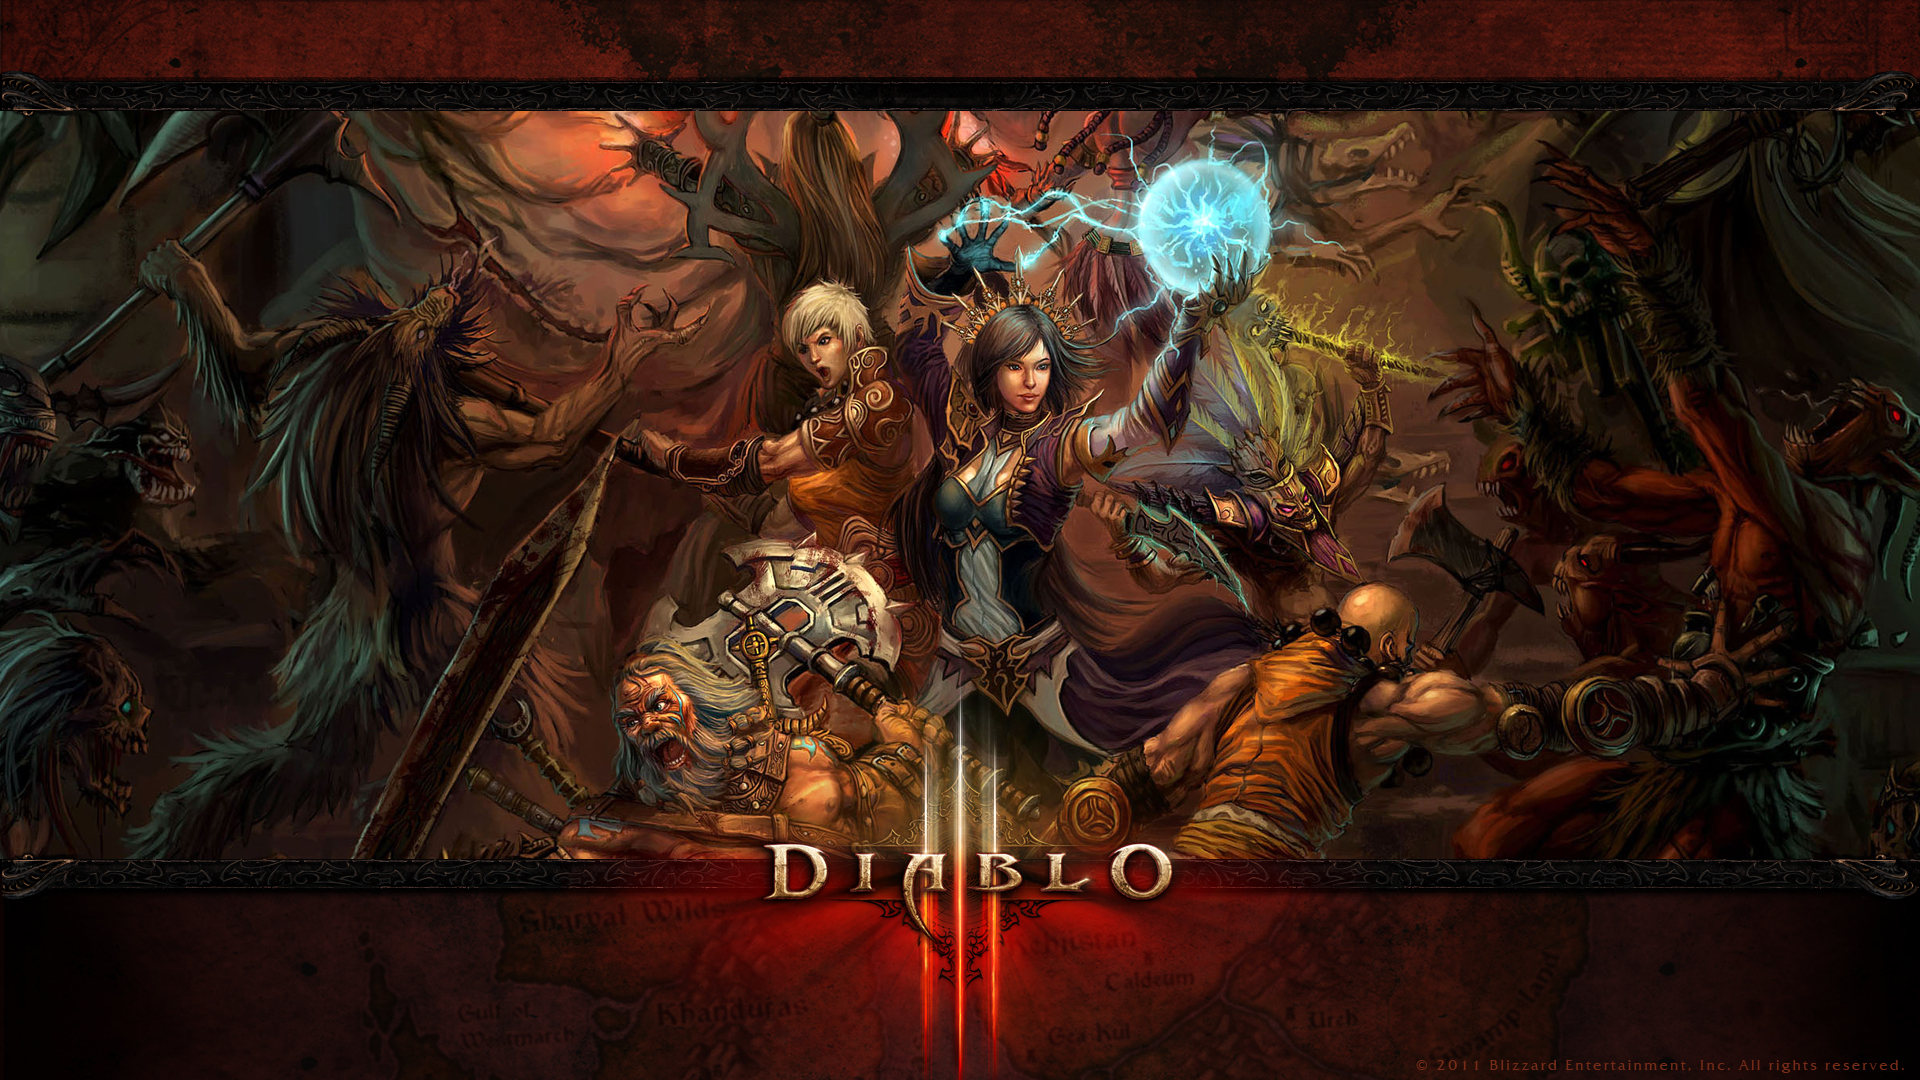 Diablo III - KeyArt Wallpaper Full HD - 1920x1080 - Classes em Combate